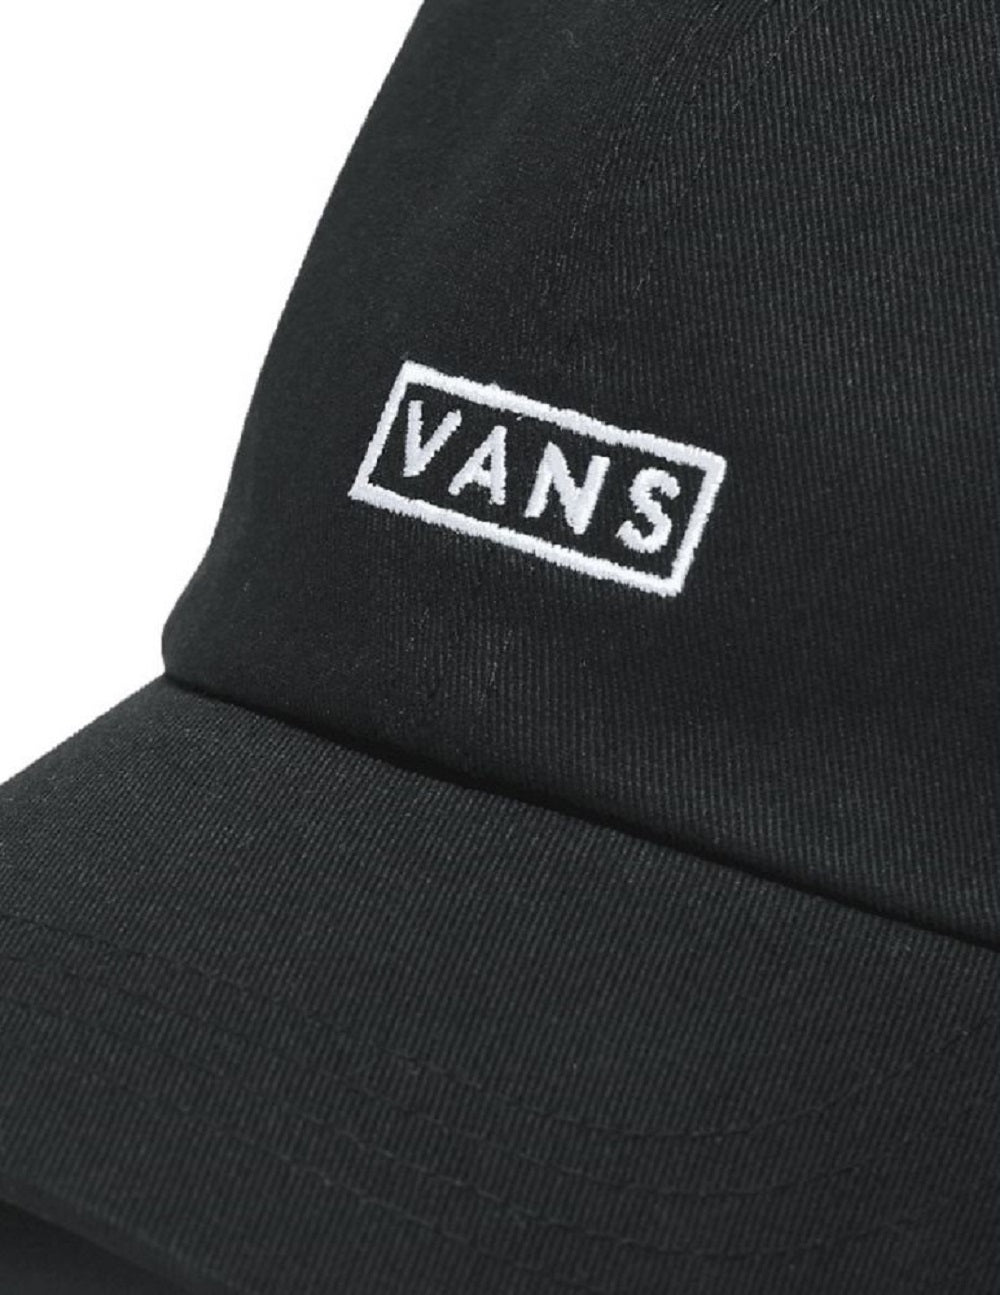 Vans Curved Bill Jocket Hat in Black